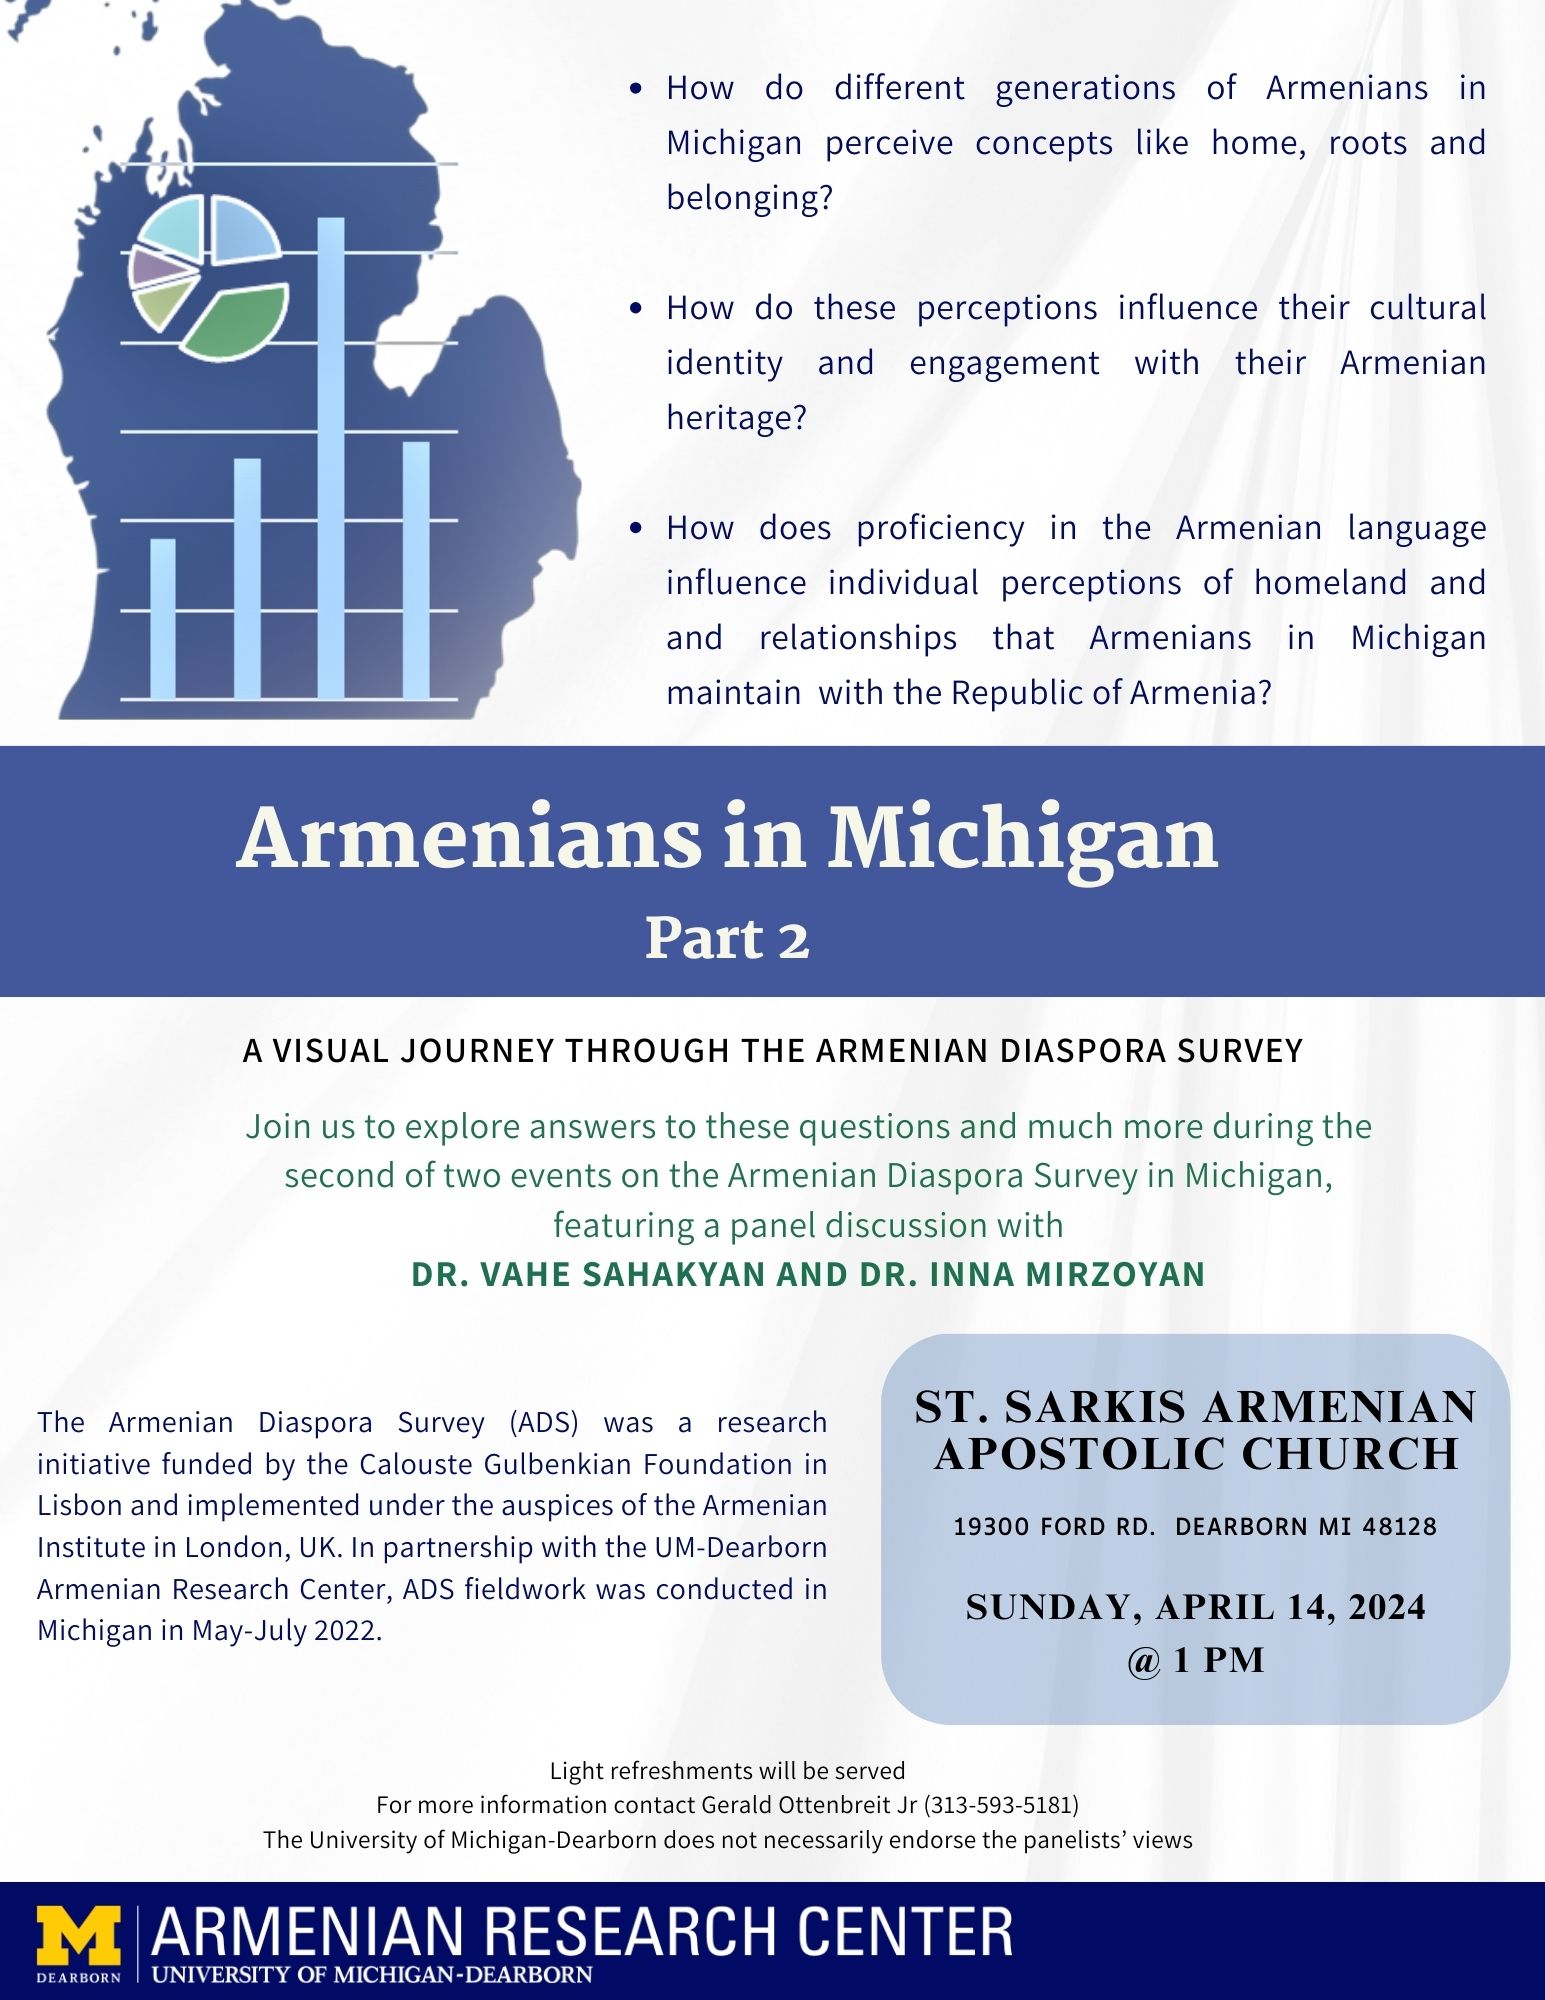 Armenians in Michigan, Part 2